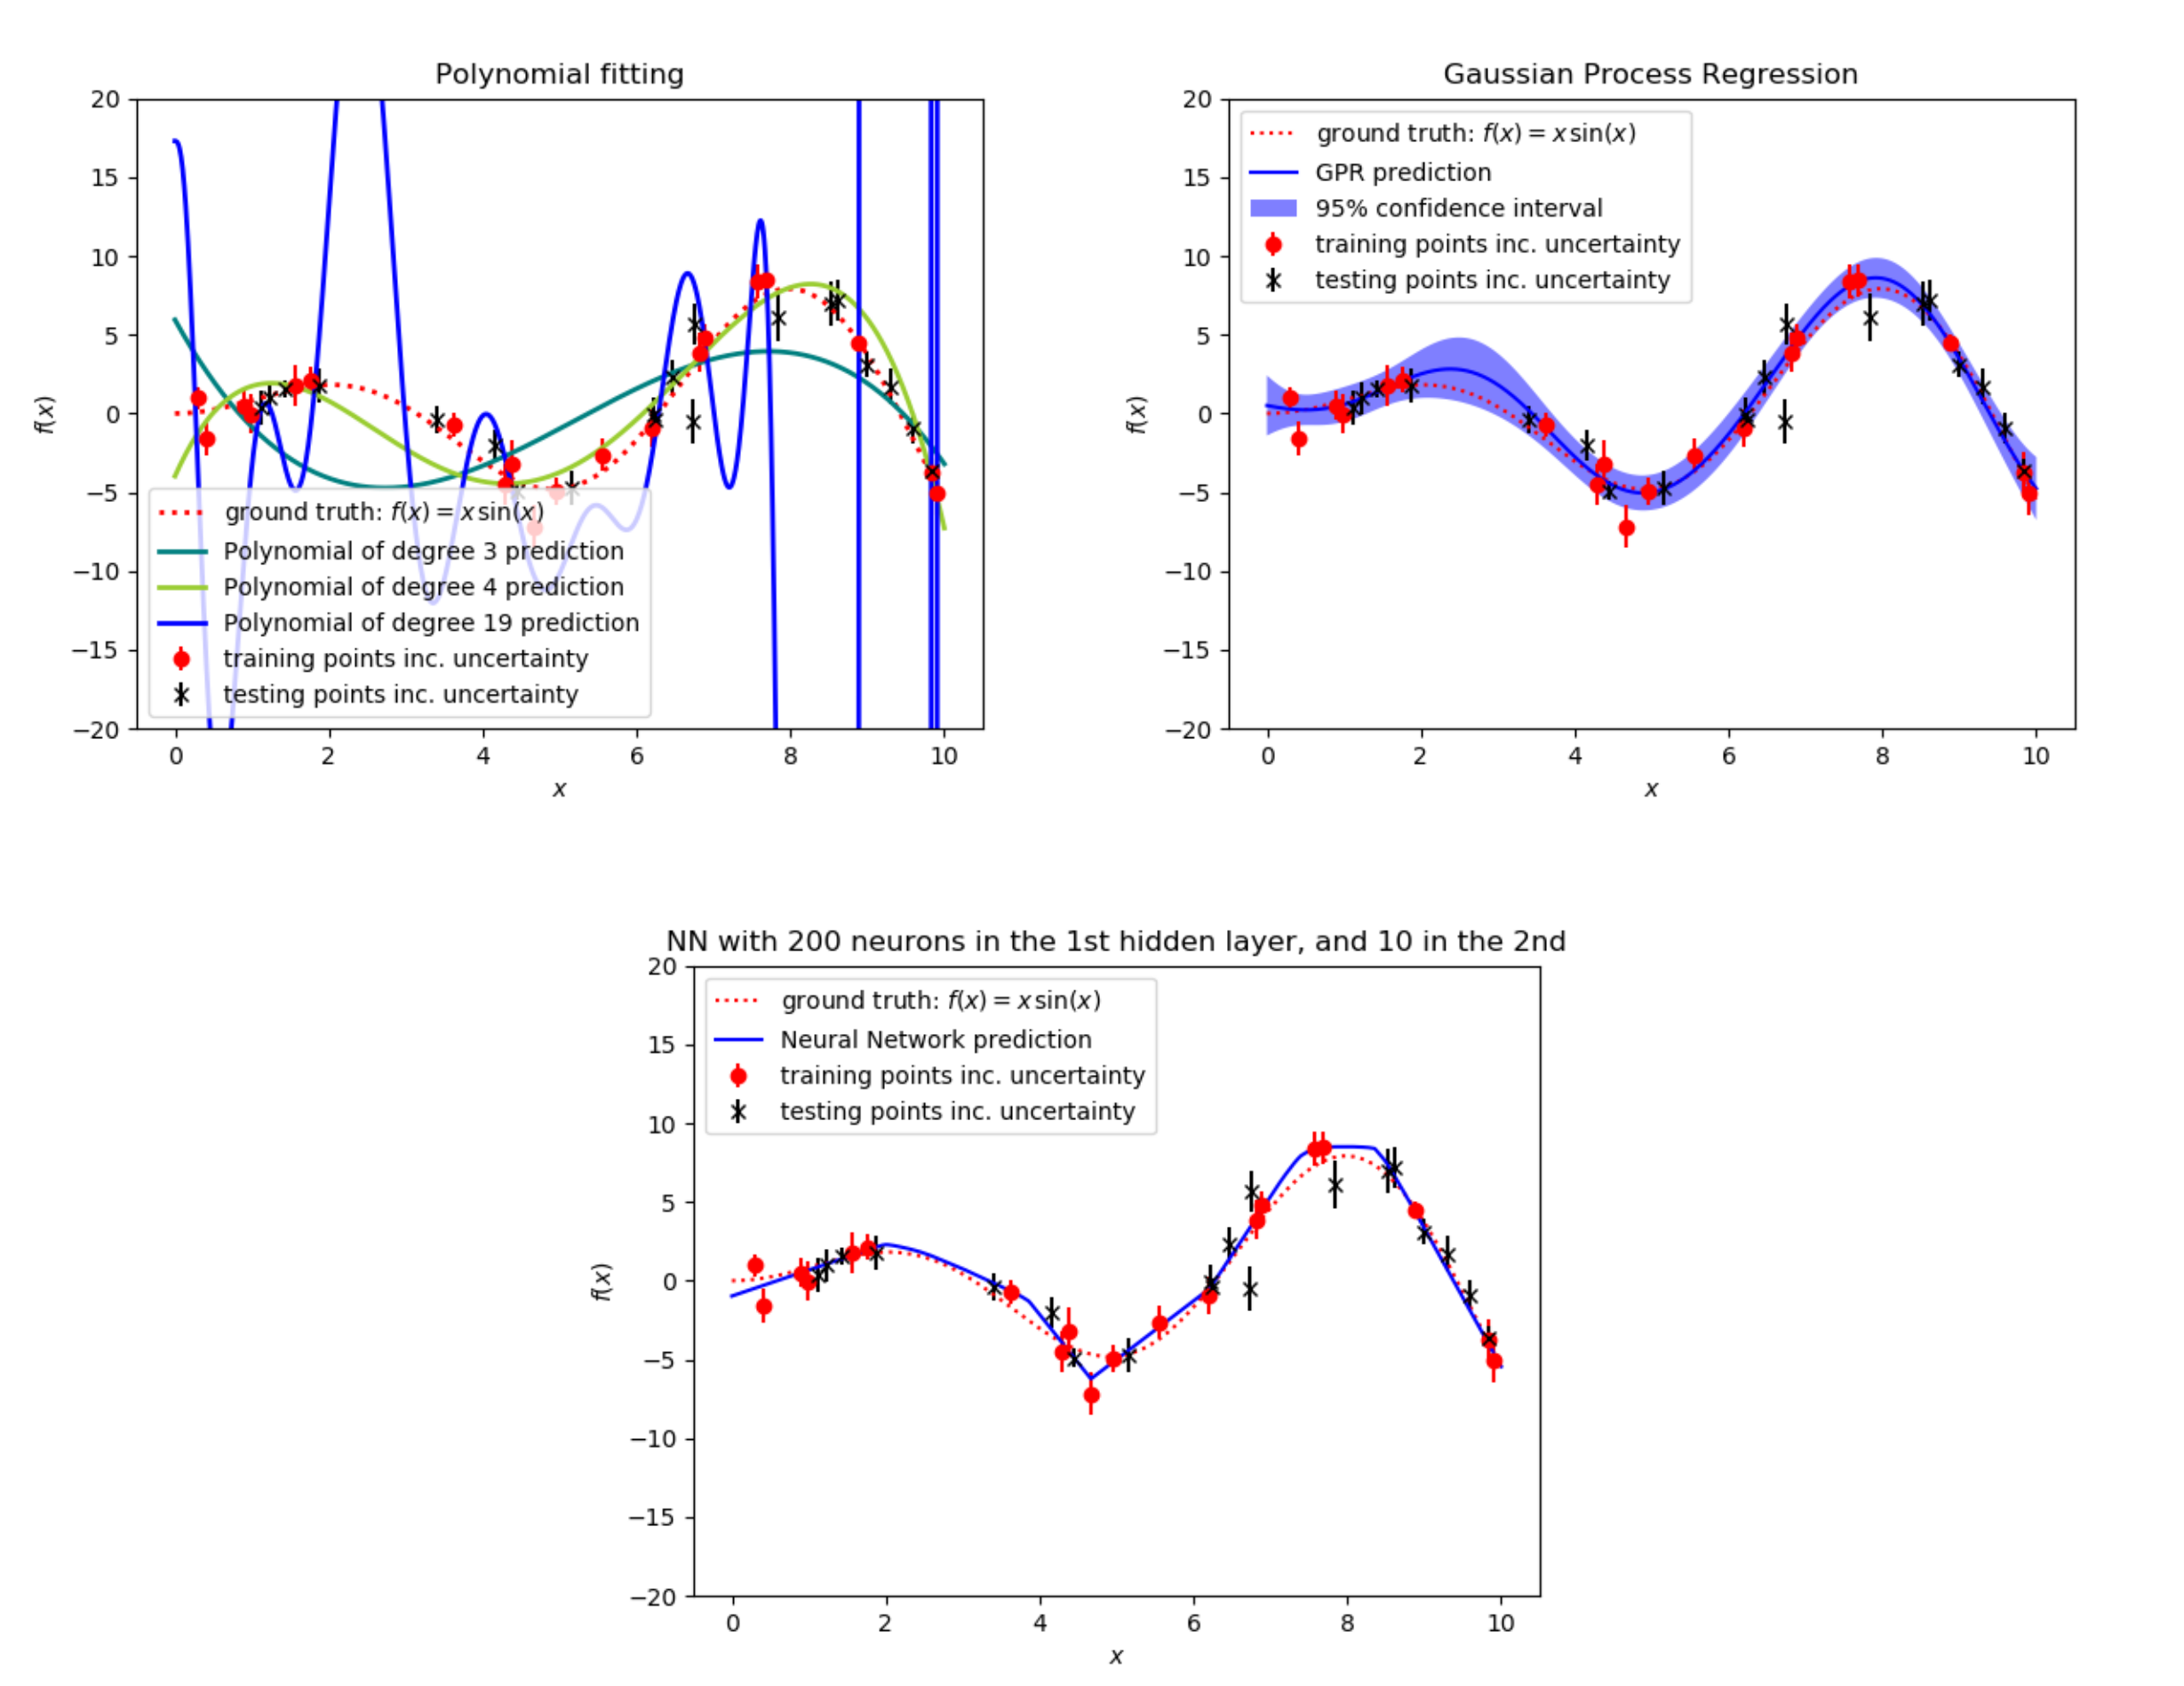 Comparison of the 3 algorithms for noisy datataset